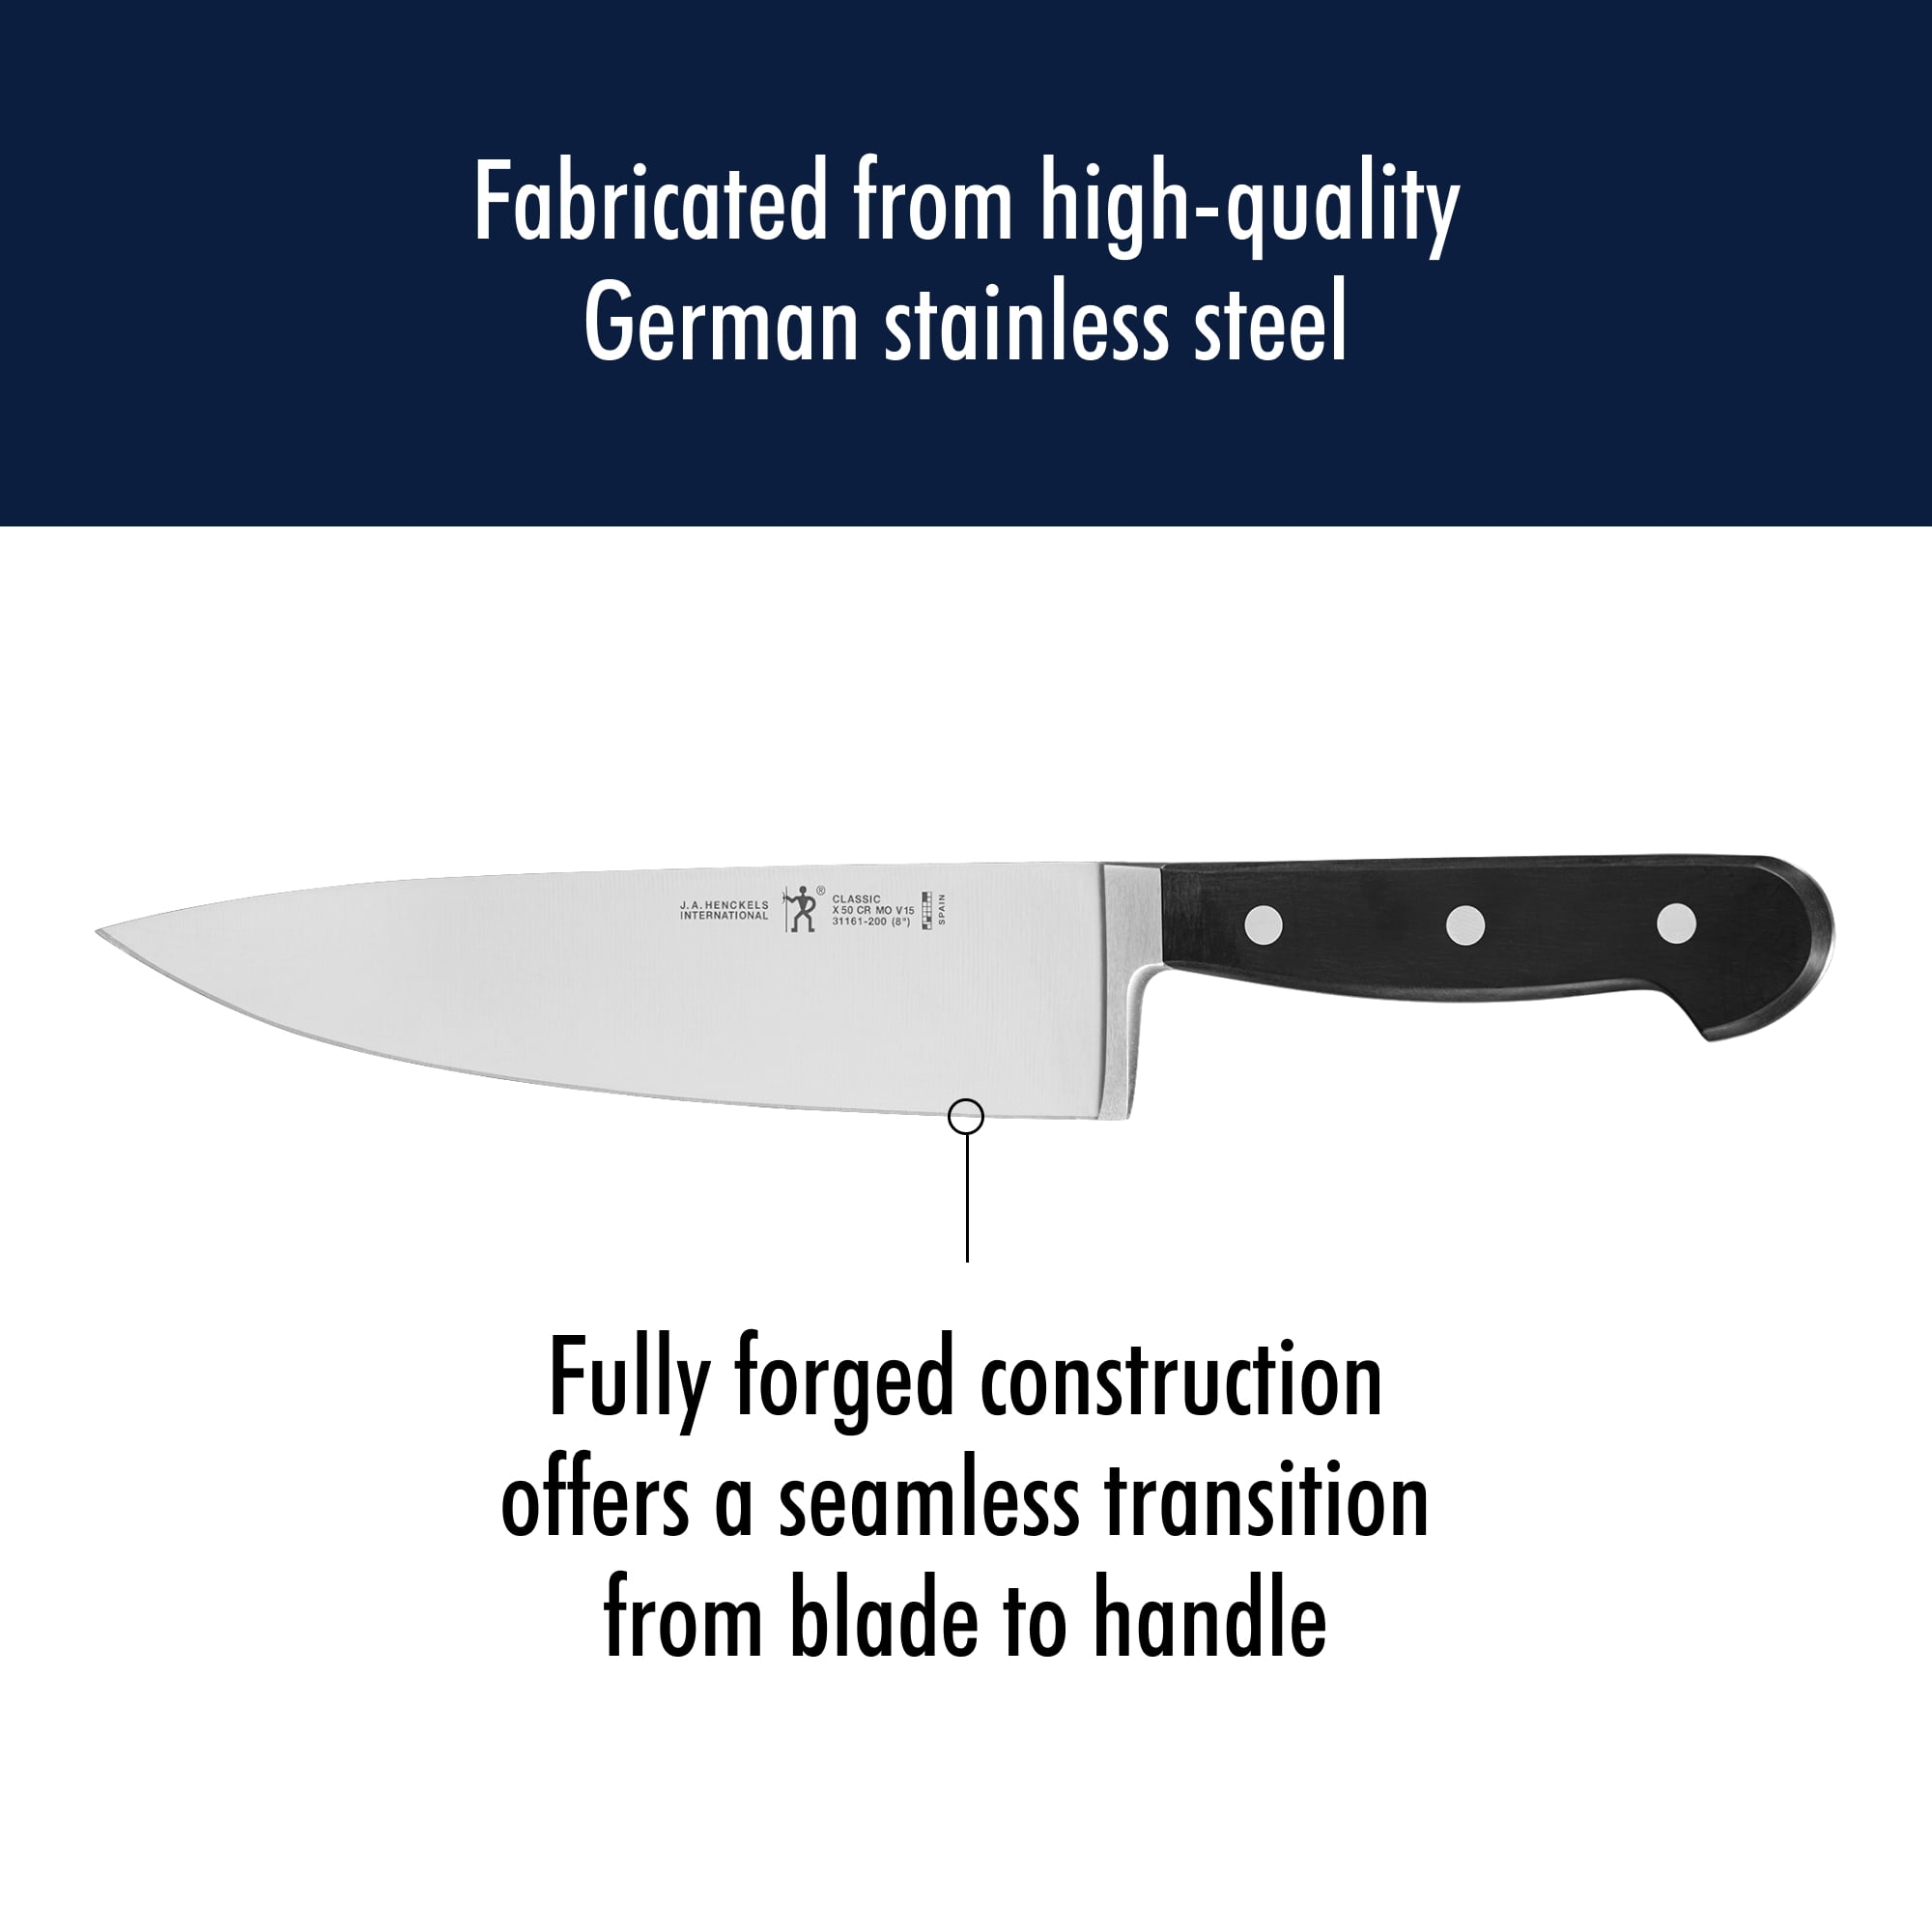 Henckels Everpoint 8-in Triple Rivet Stainless Steel Chef Knife